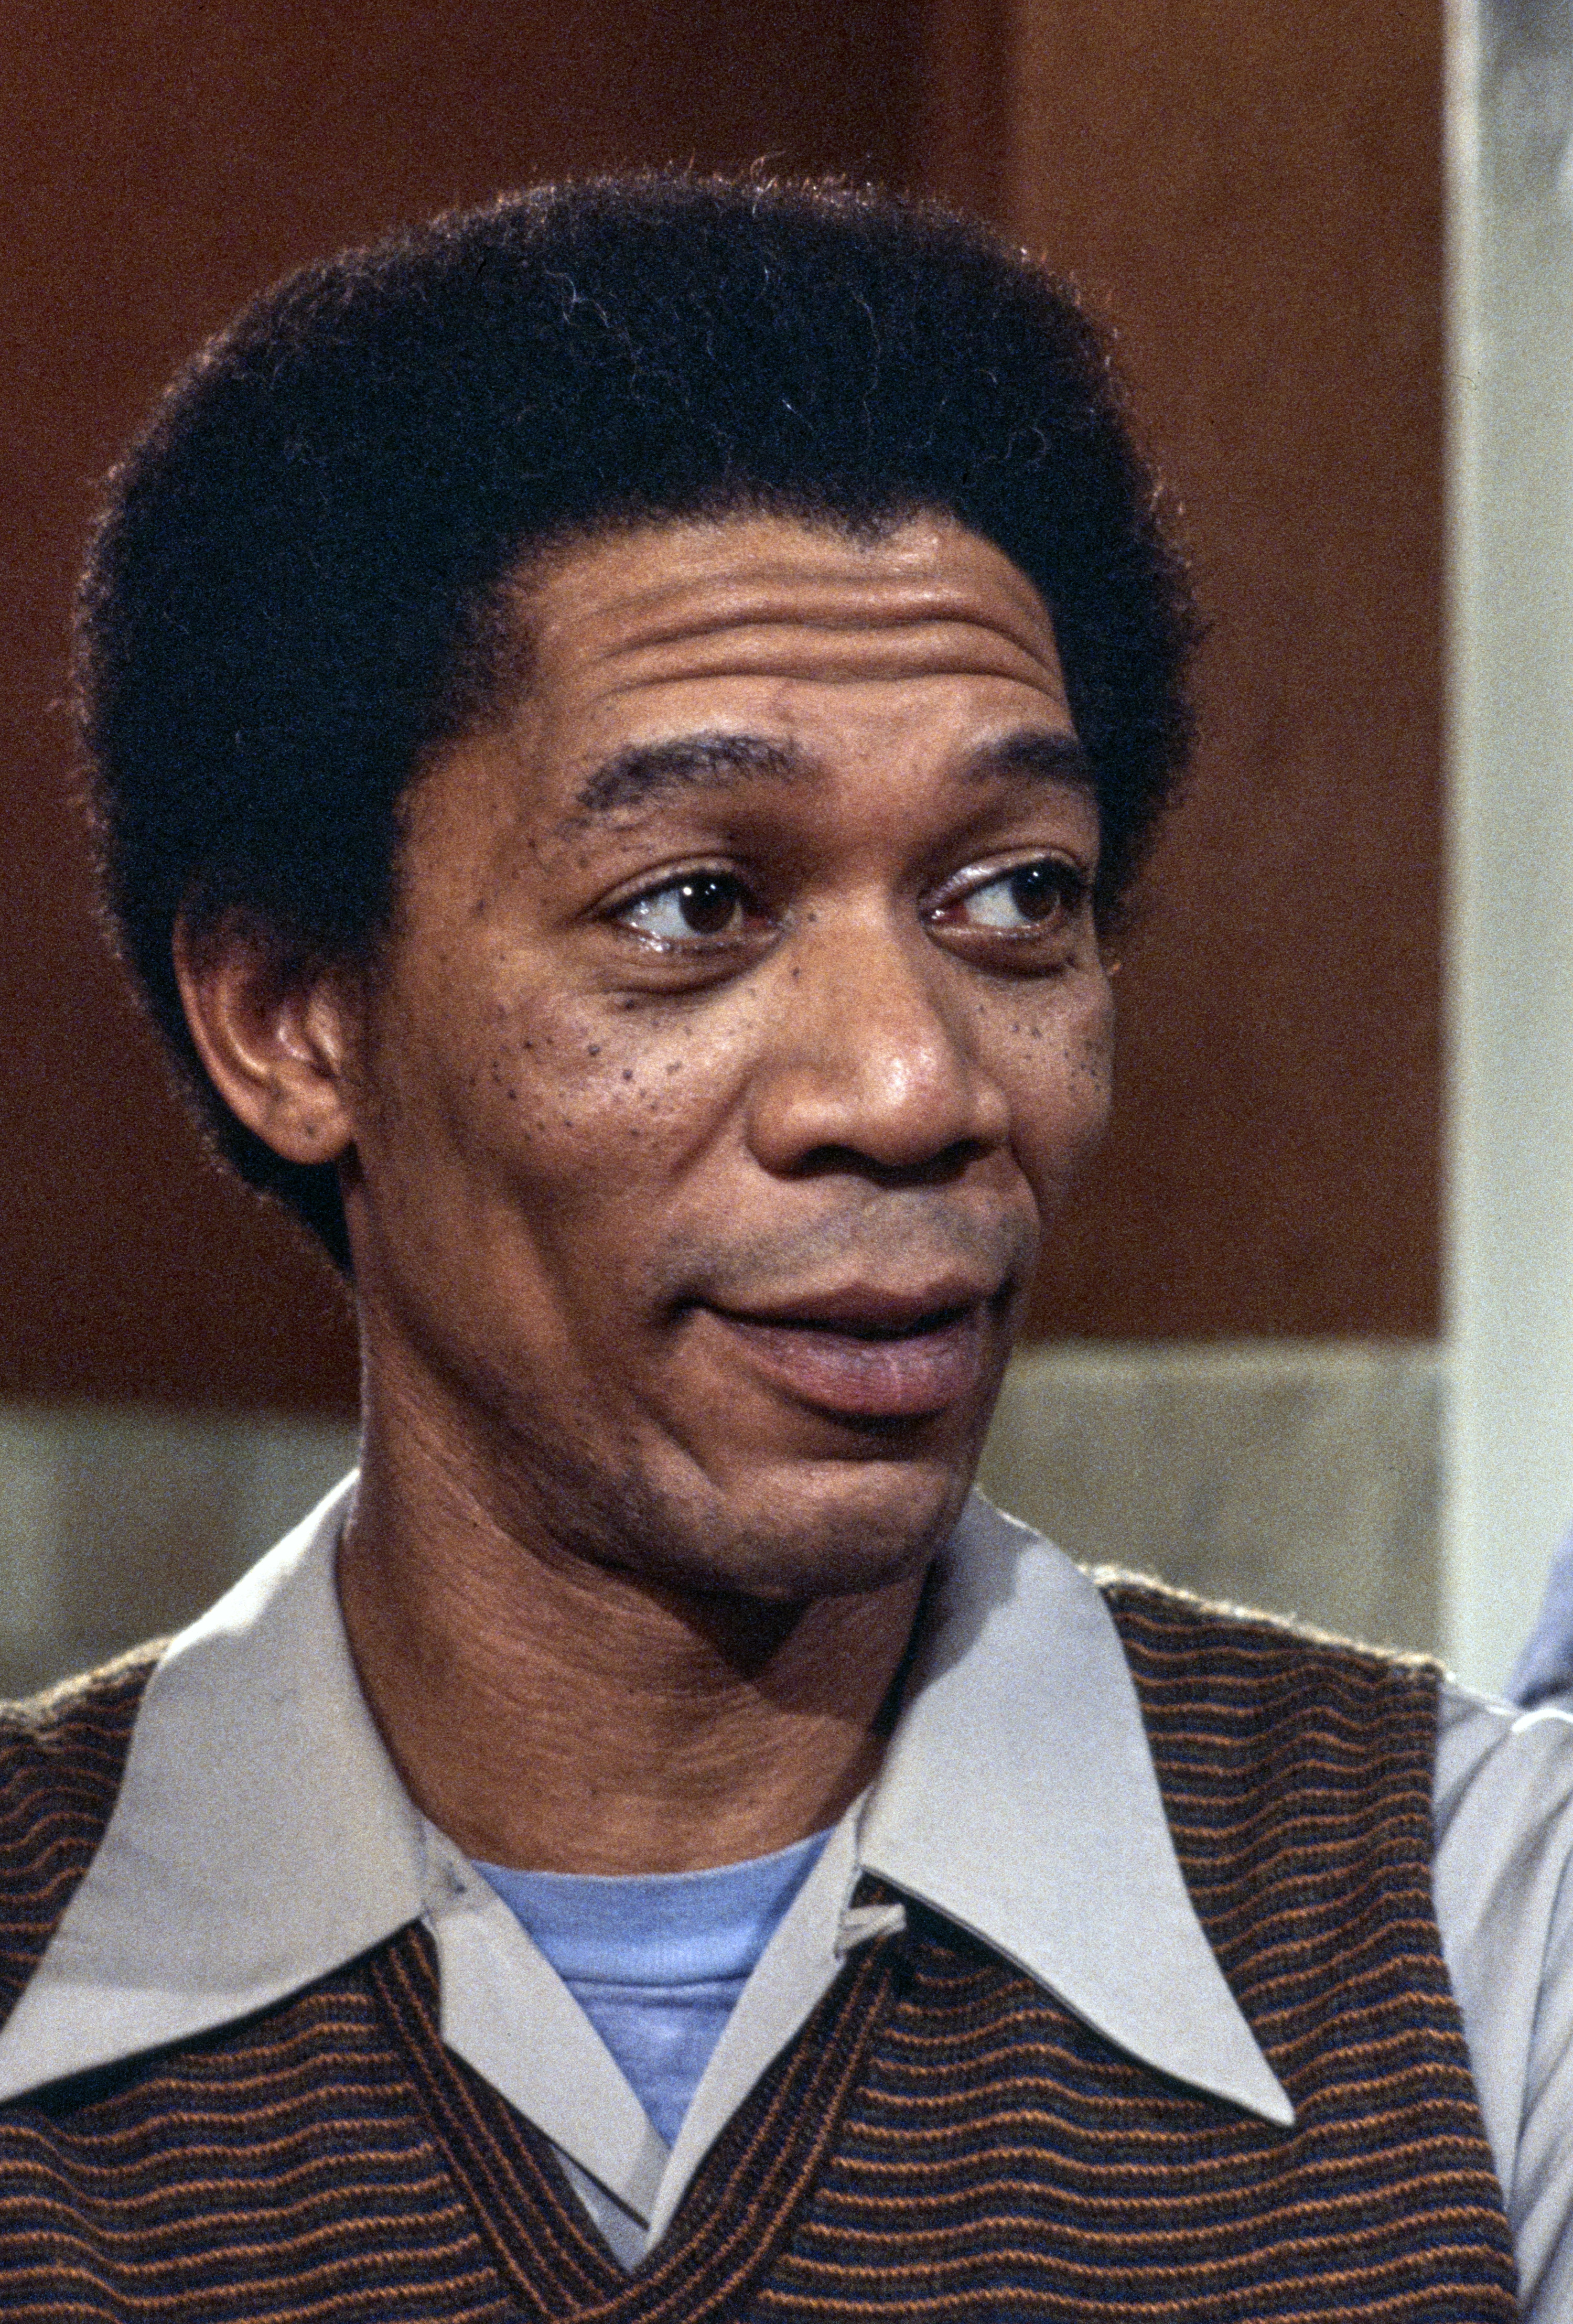 Morgan Freeman in 1979